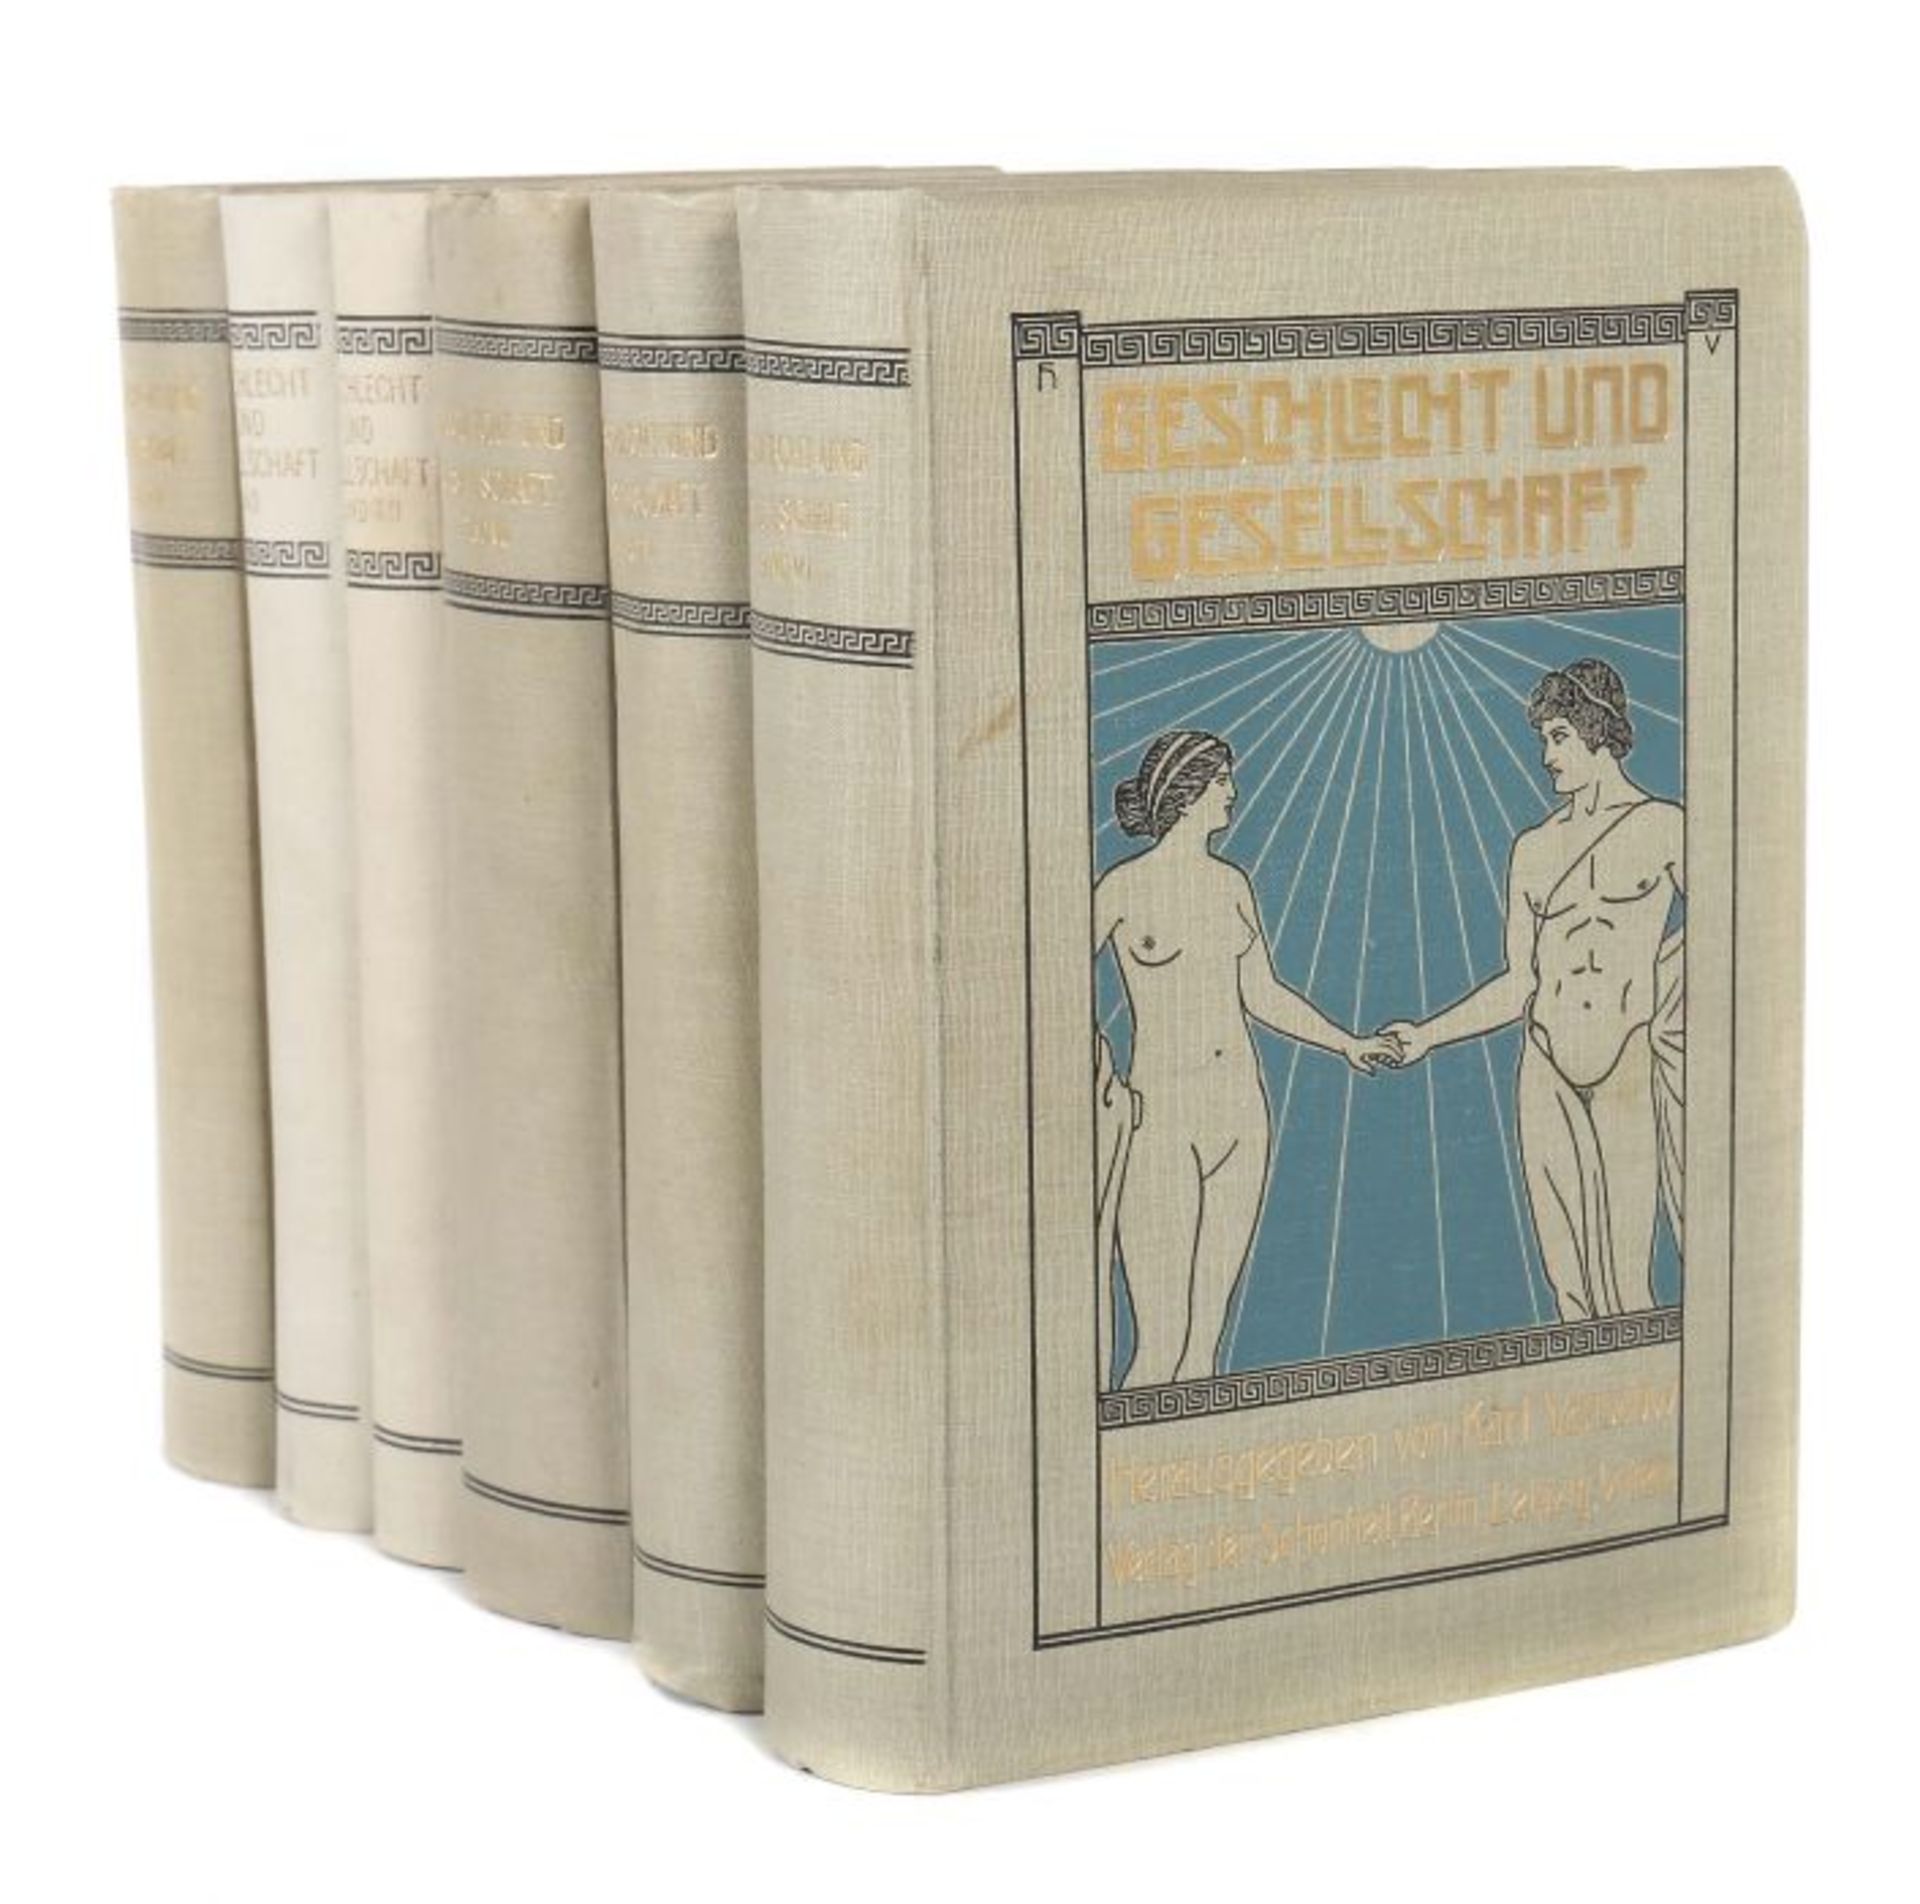 Vanselow, Karl bzw. Giesecke Richard A. (Hrsg.)Geschlecht und Gesellschaft, Berlin/München, Verlag